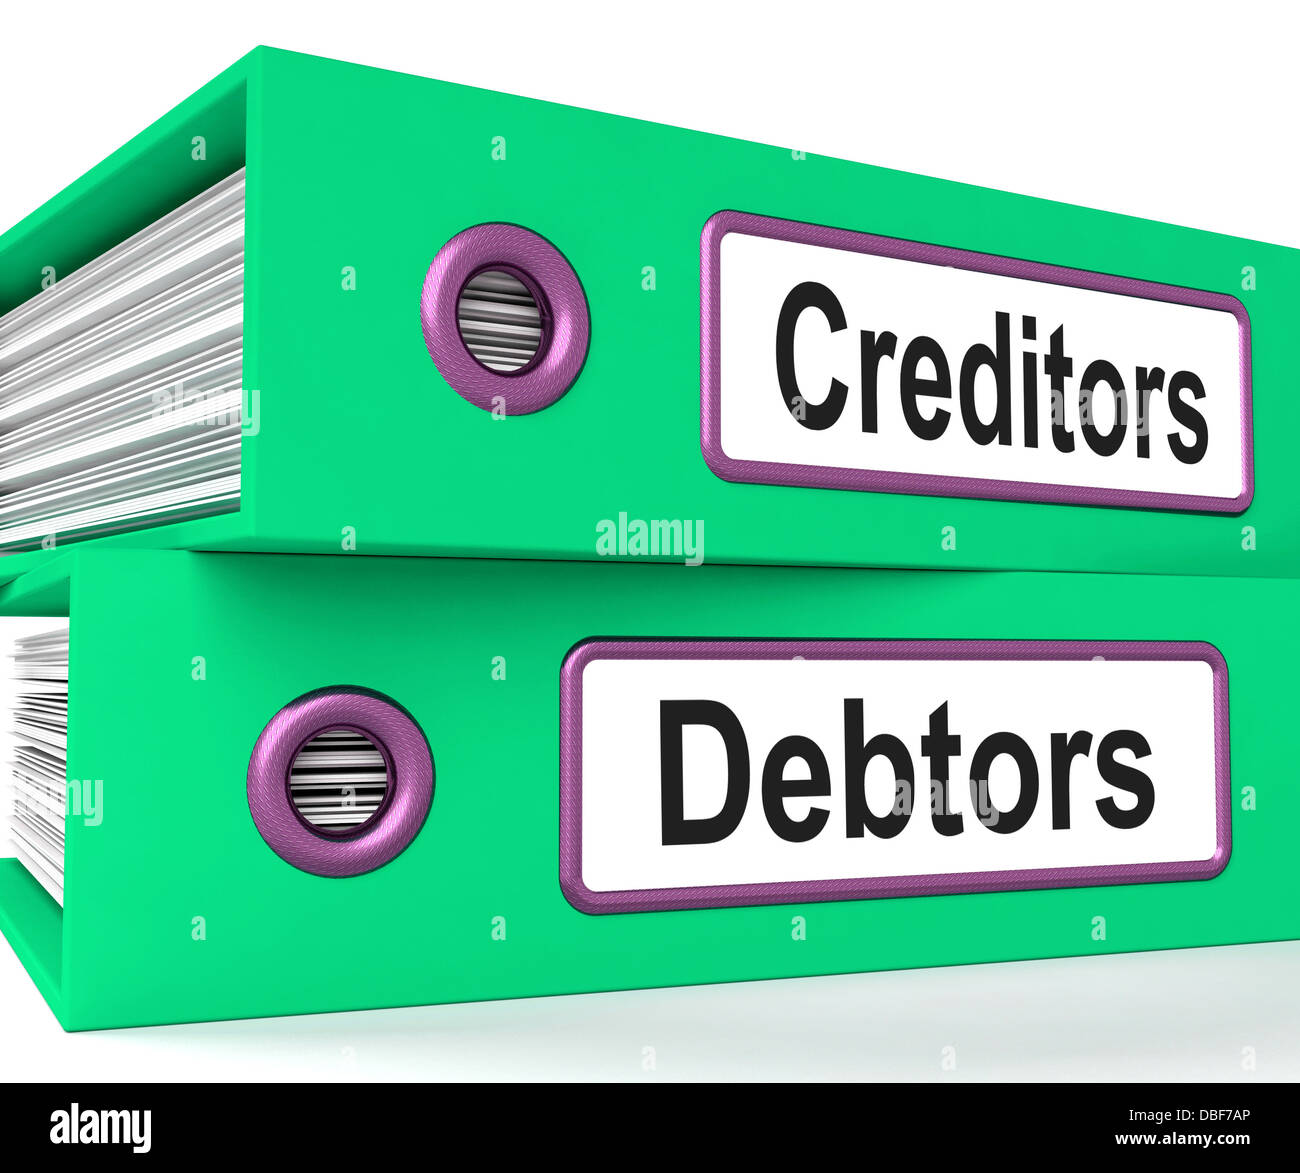 Creditors Debtors Files Shows Lending And Borrowing Stock Photo